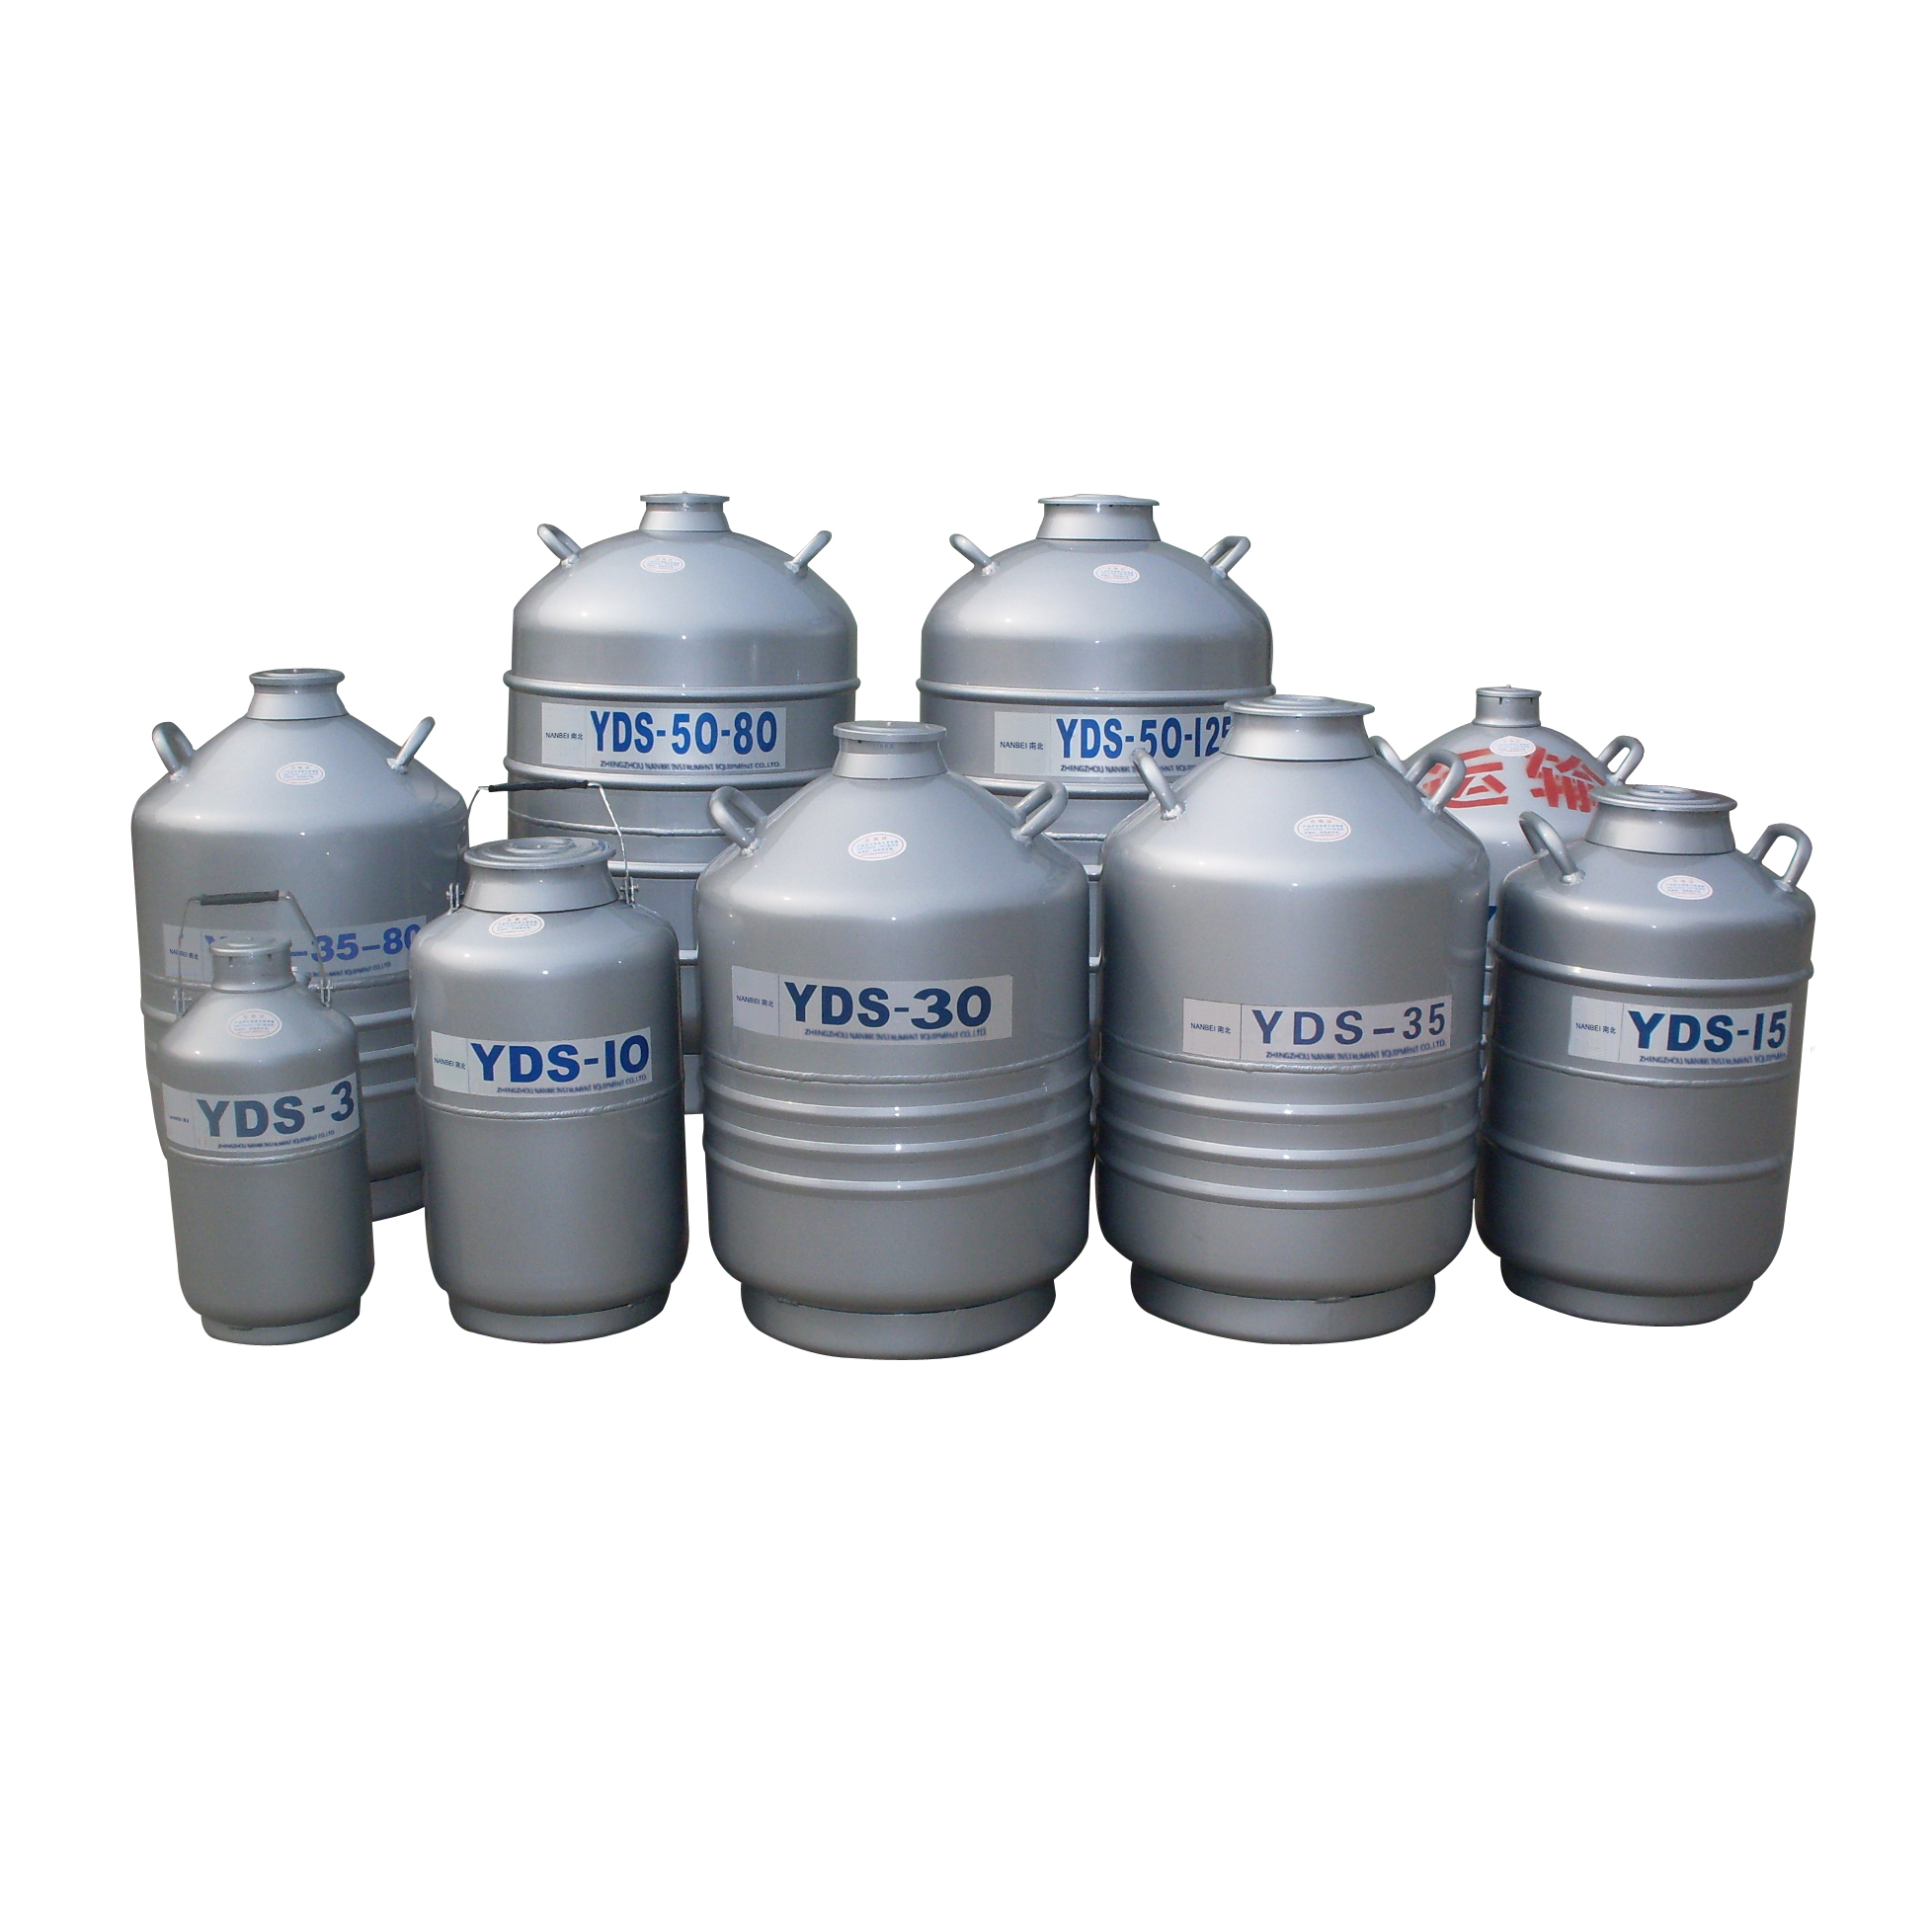 YDS-30B 30L Transport-type Liquid Nitrogen Biological Container